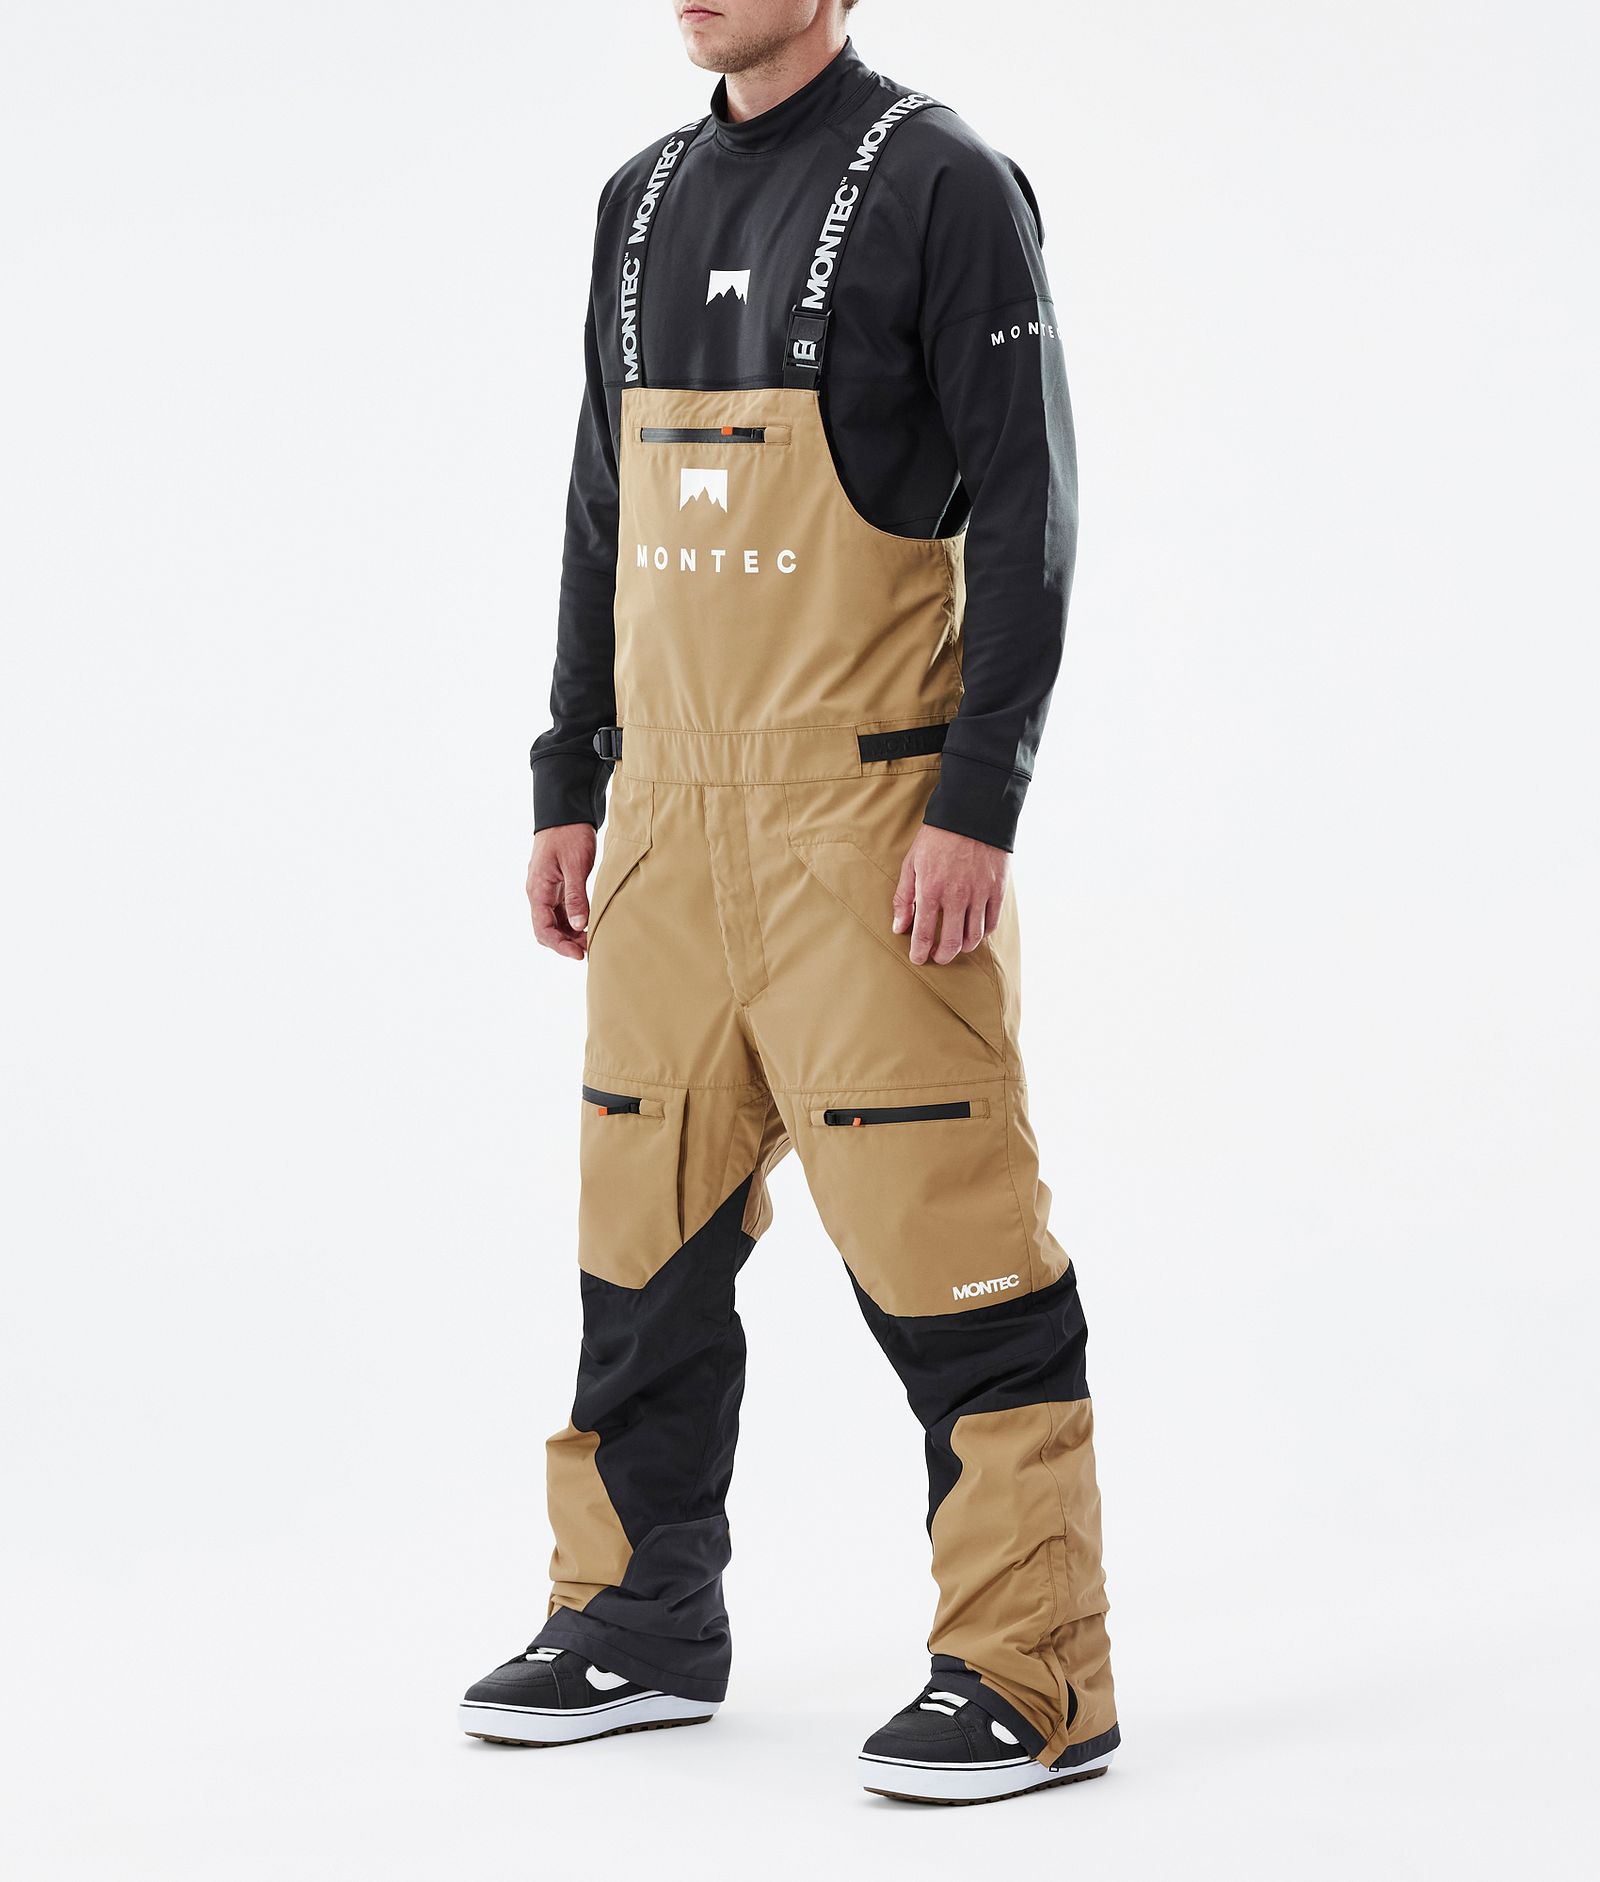 Montec Arch Pantalones Snowboard Hombre Gold/Black - Dorado